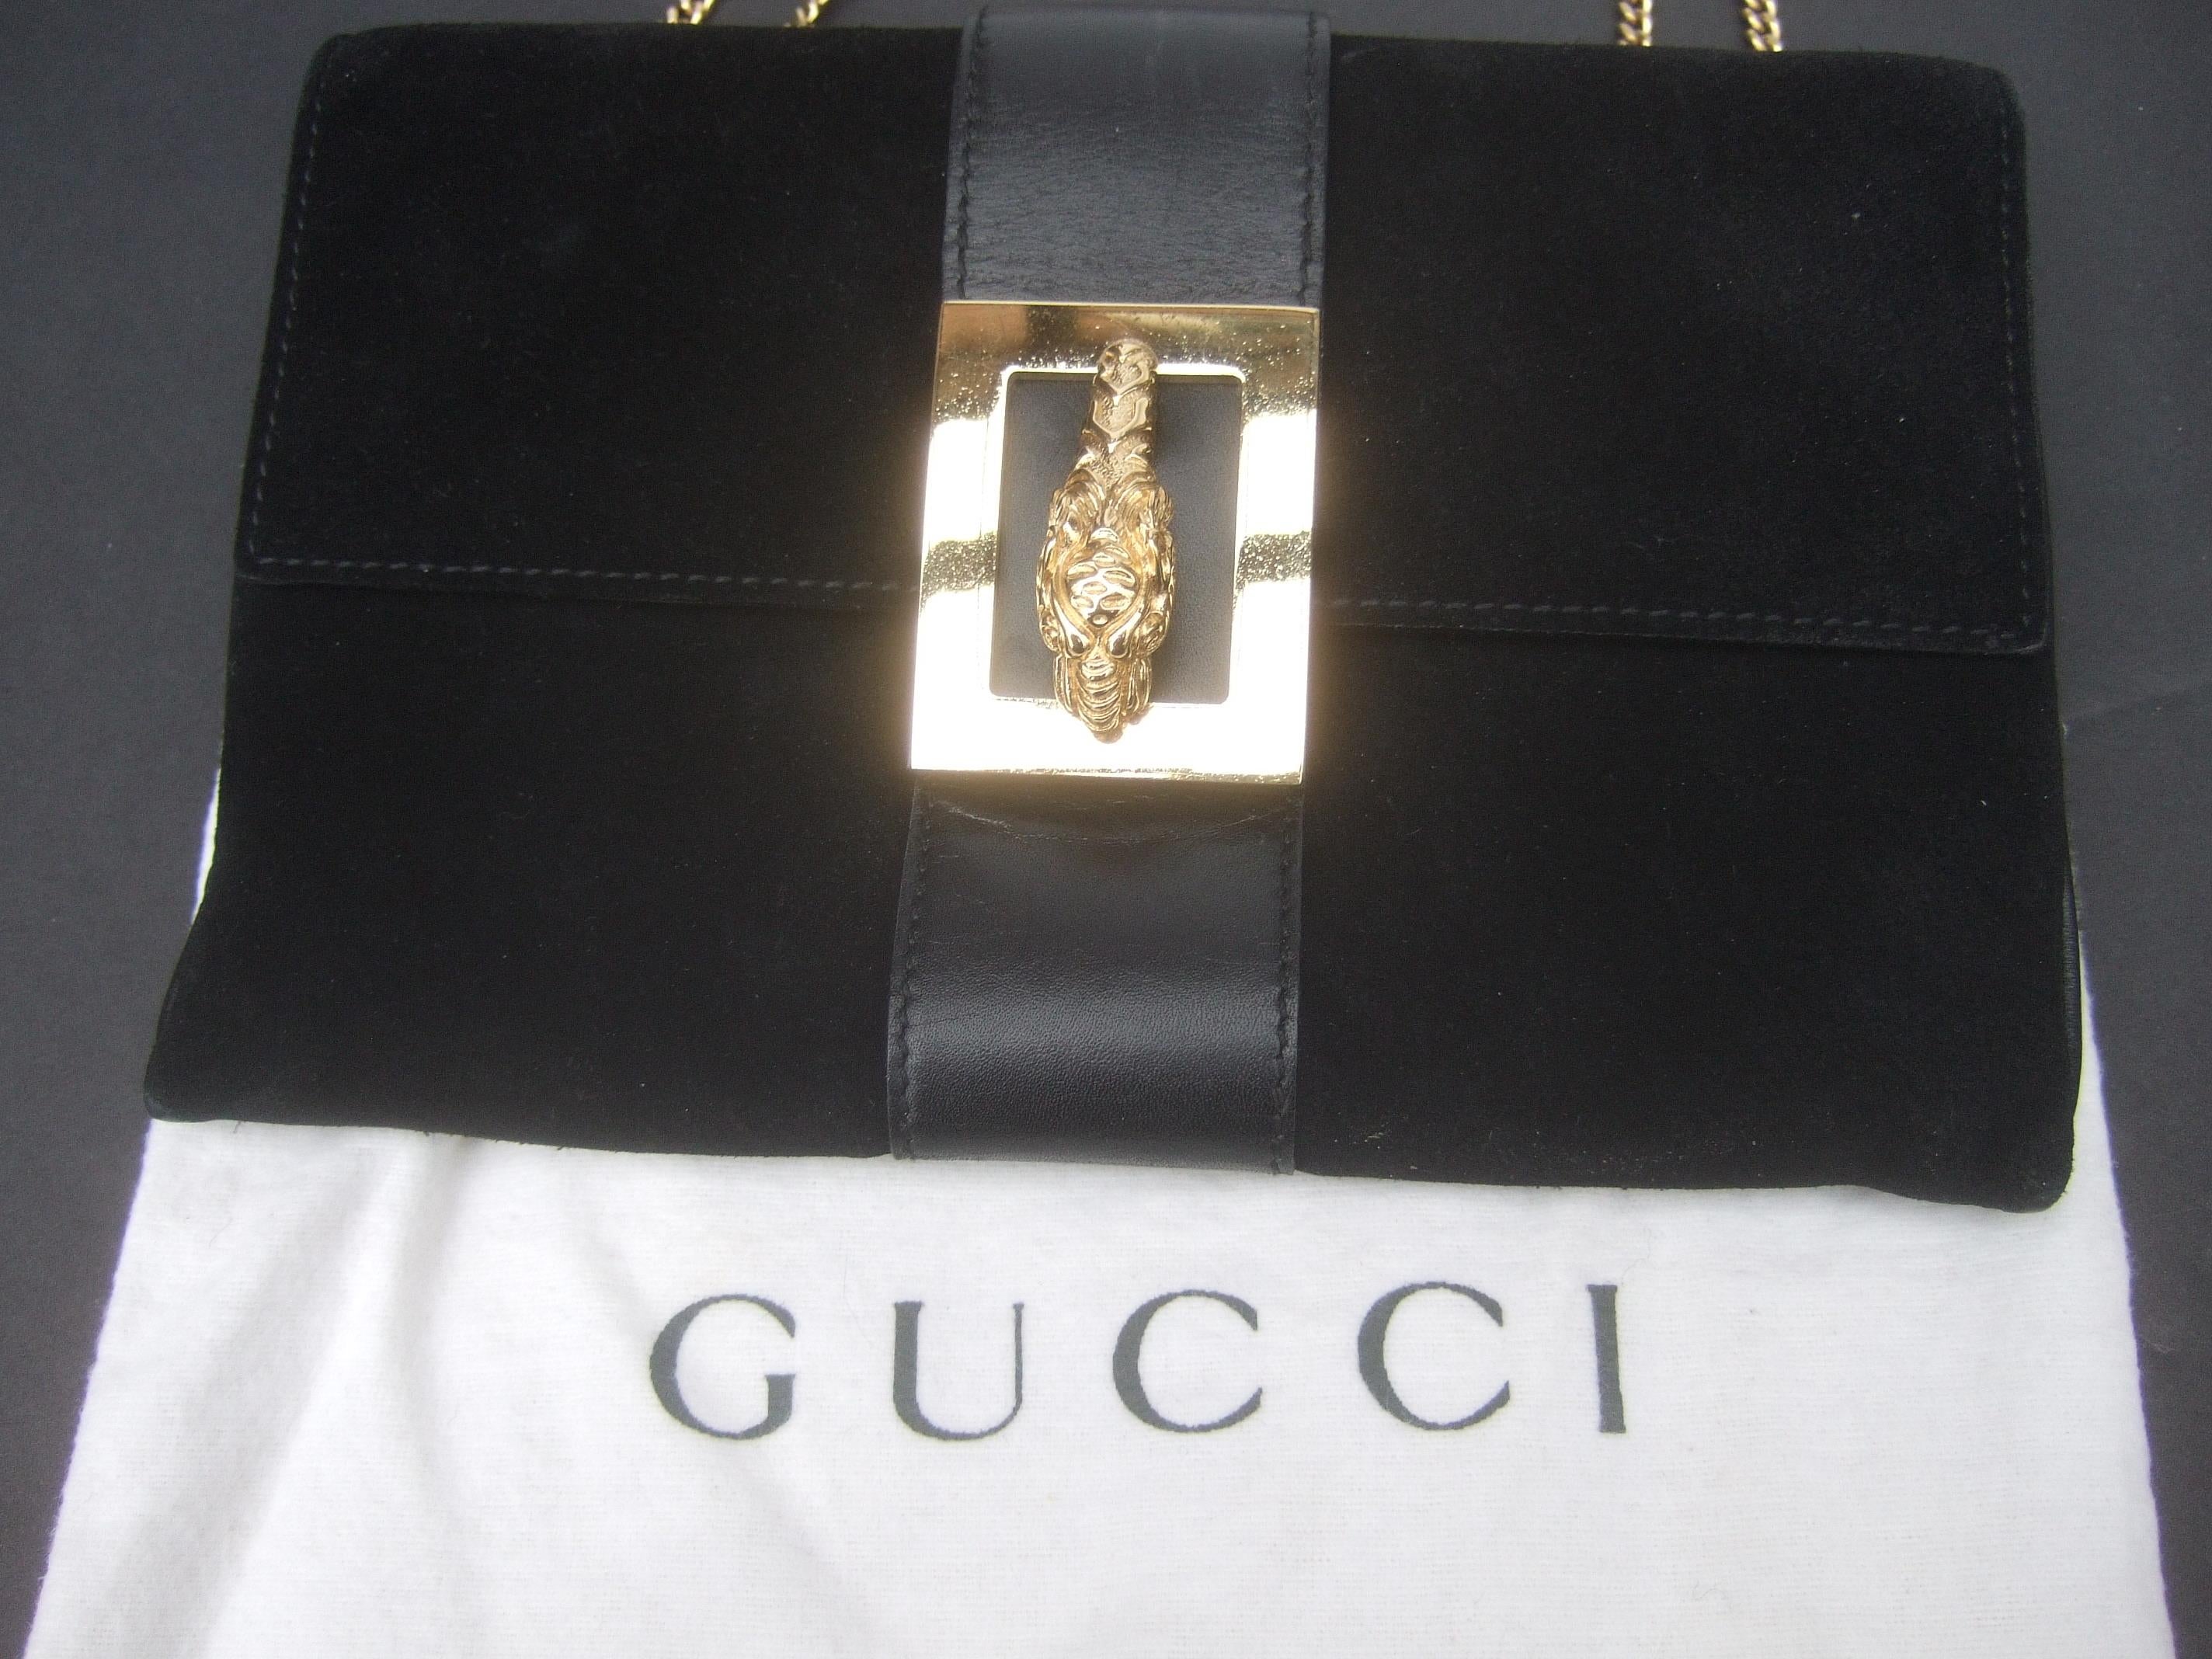 Gucci Black Suede Gilt Tiger Emblem Handbag Tom Ford Era c 1990s 3